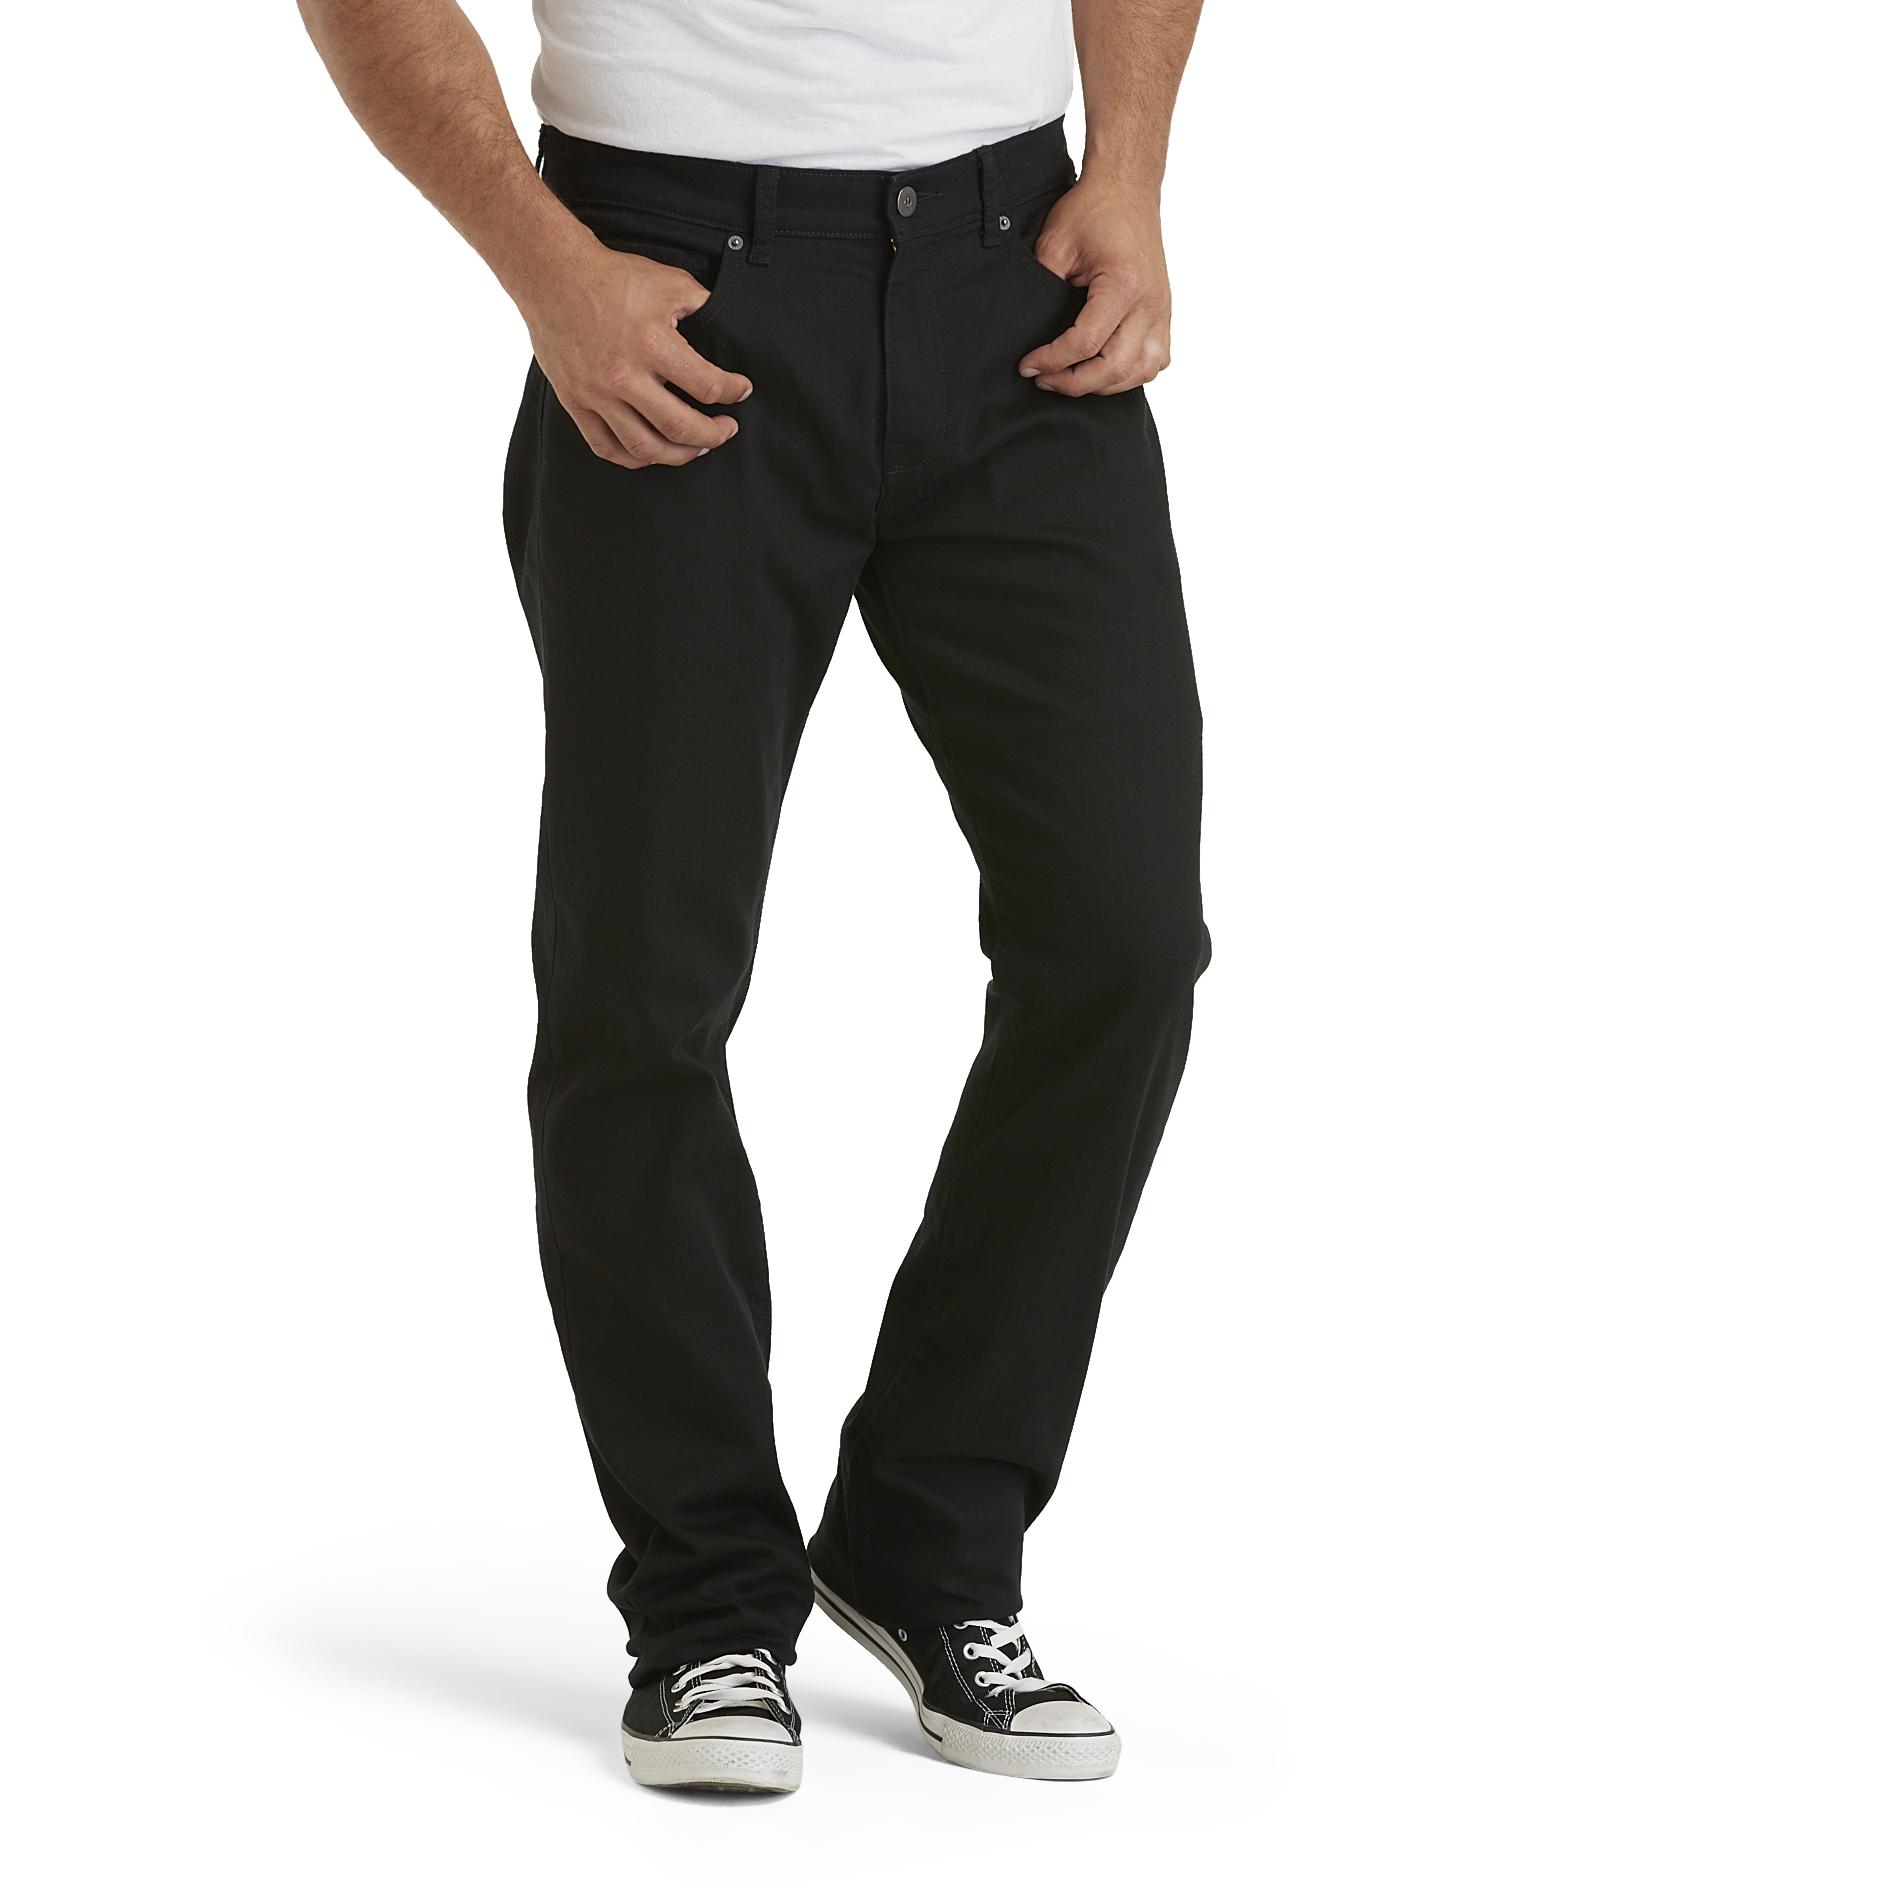 Lee Men's Slim Fit Straight Leg Colored Jeans - Sears